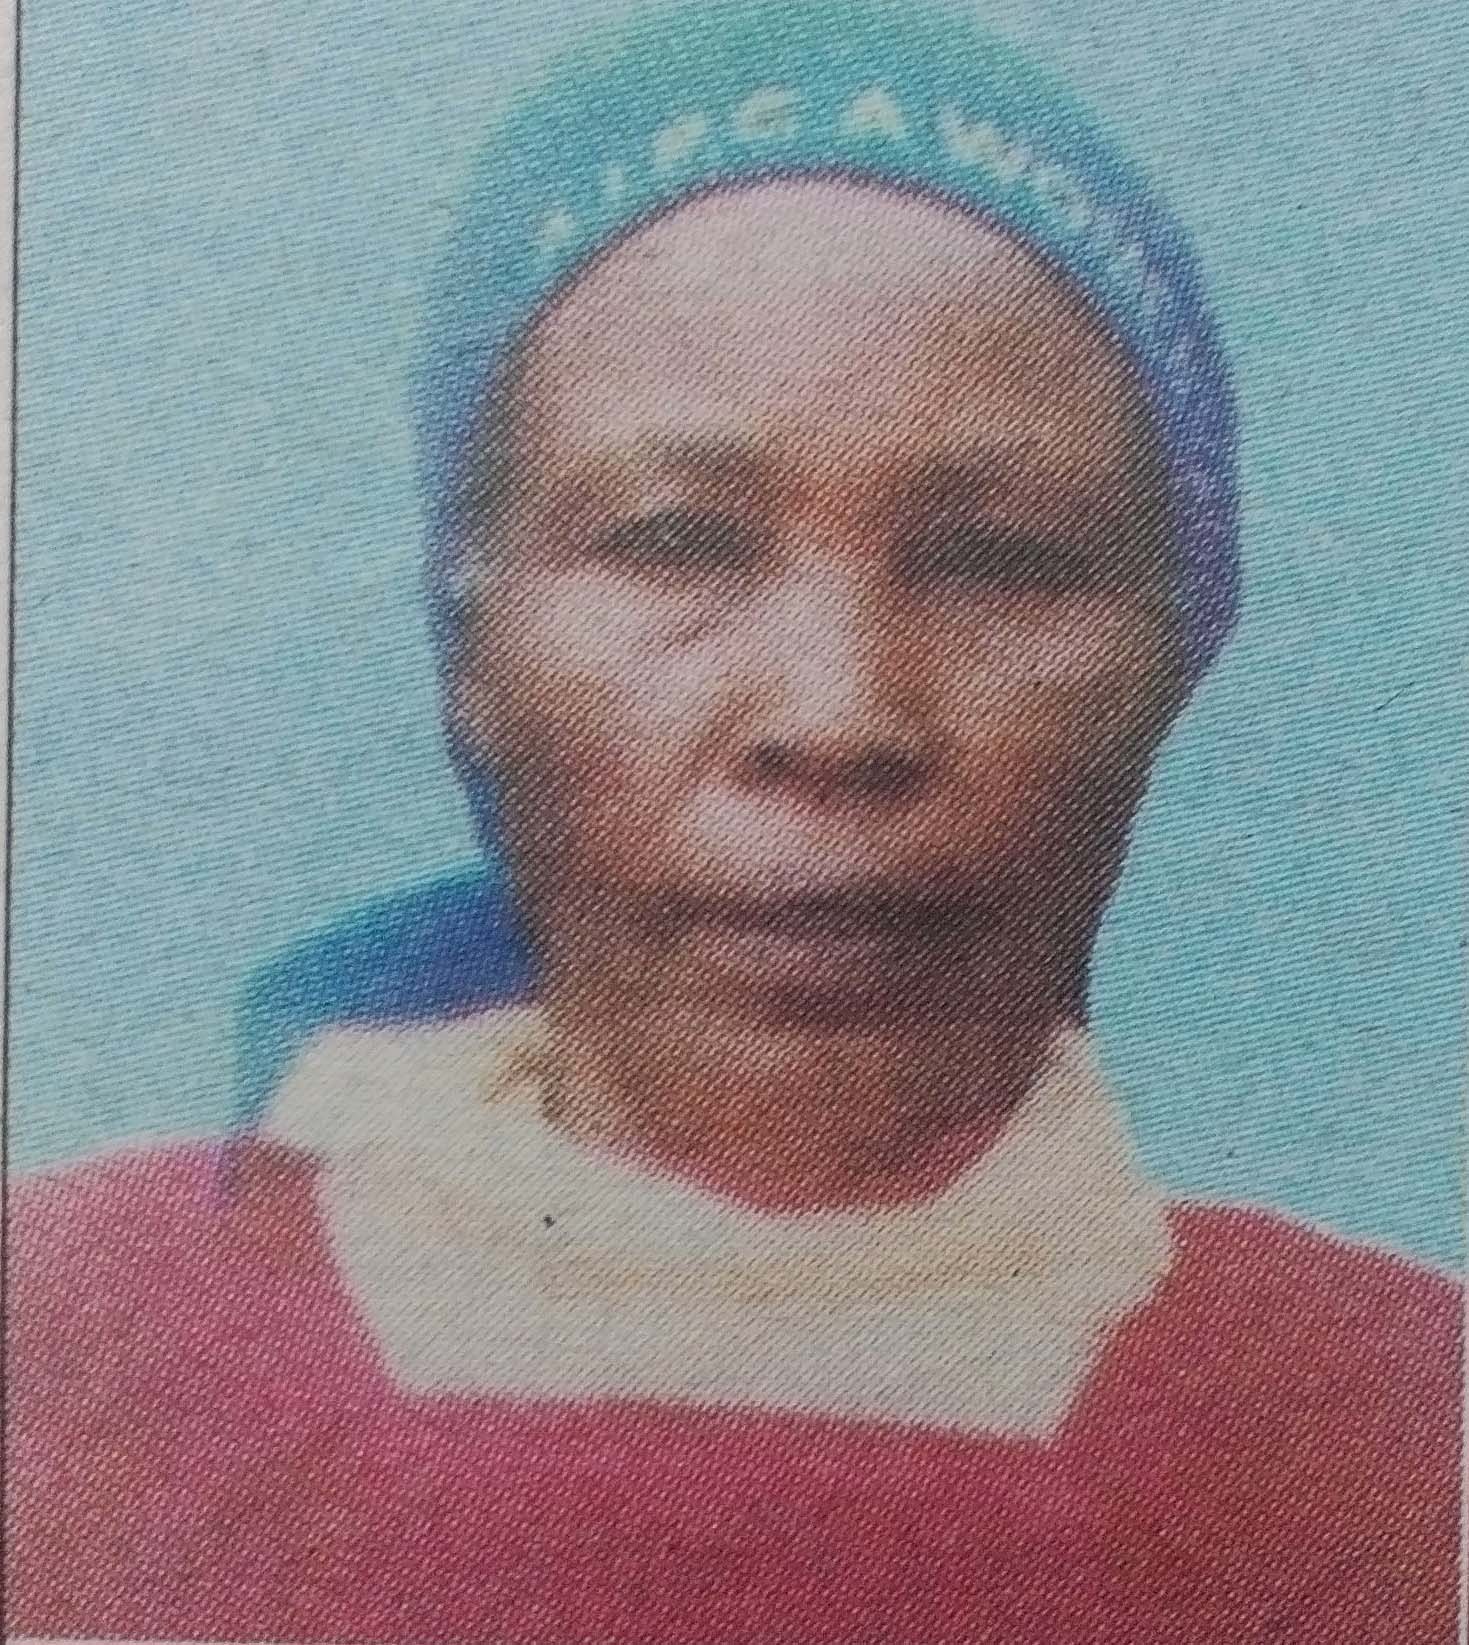 Obituary Image of Miriam Njeri Mwangi